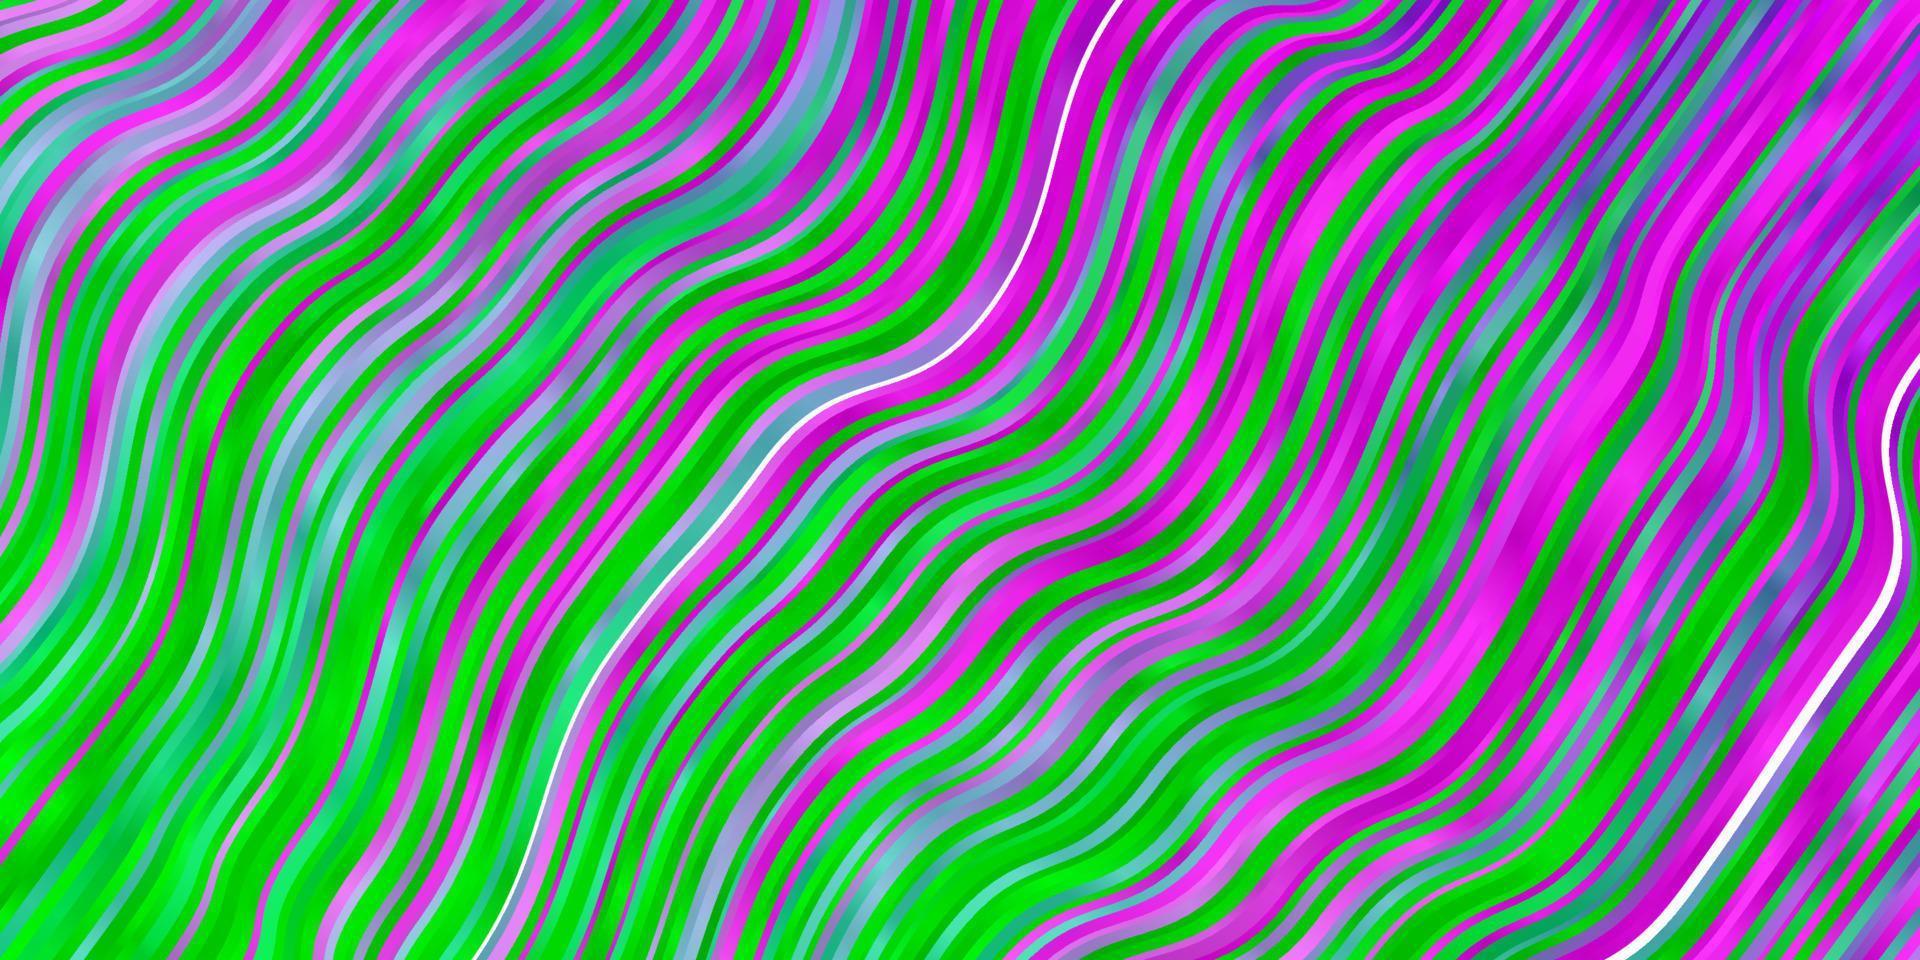 hellrosa, grünes Vektormuster mit schiefen Linien. vektor